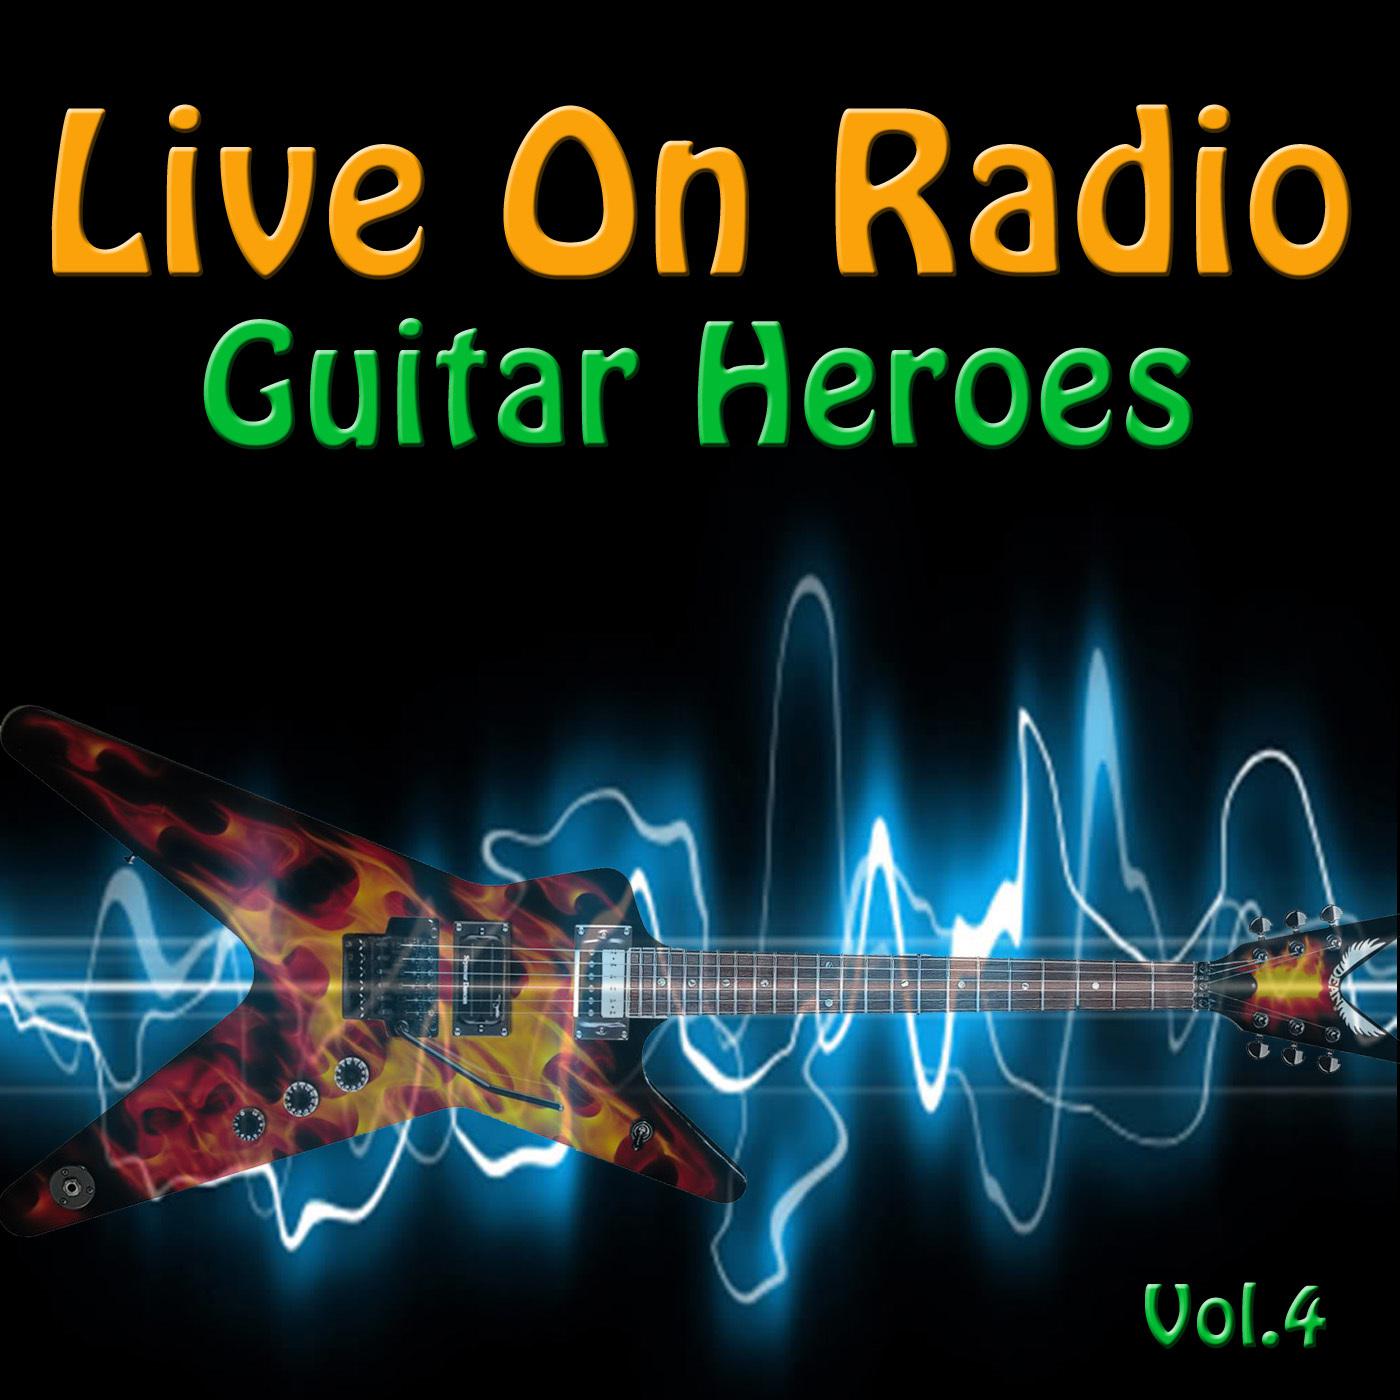 Live On Radio - Guitar Heroes, Vol. 4 (Live)